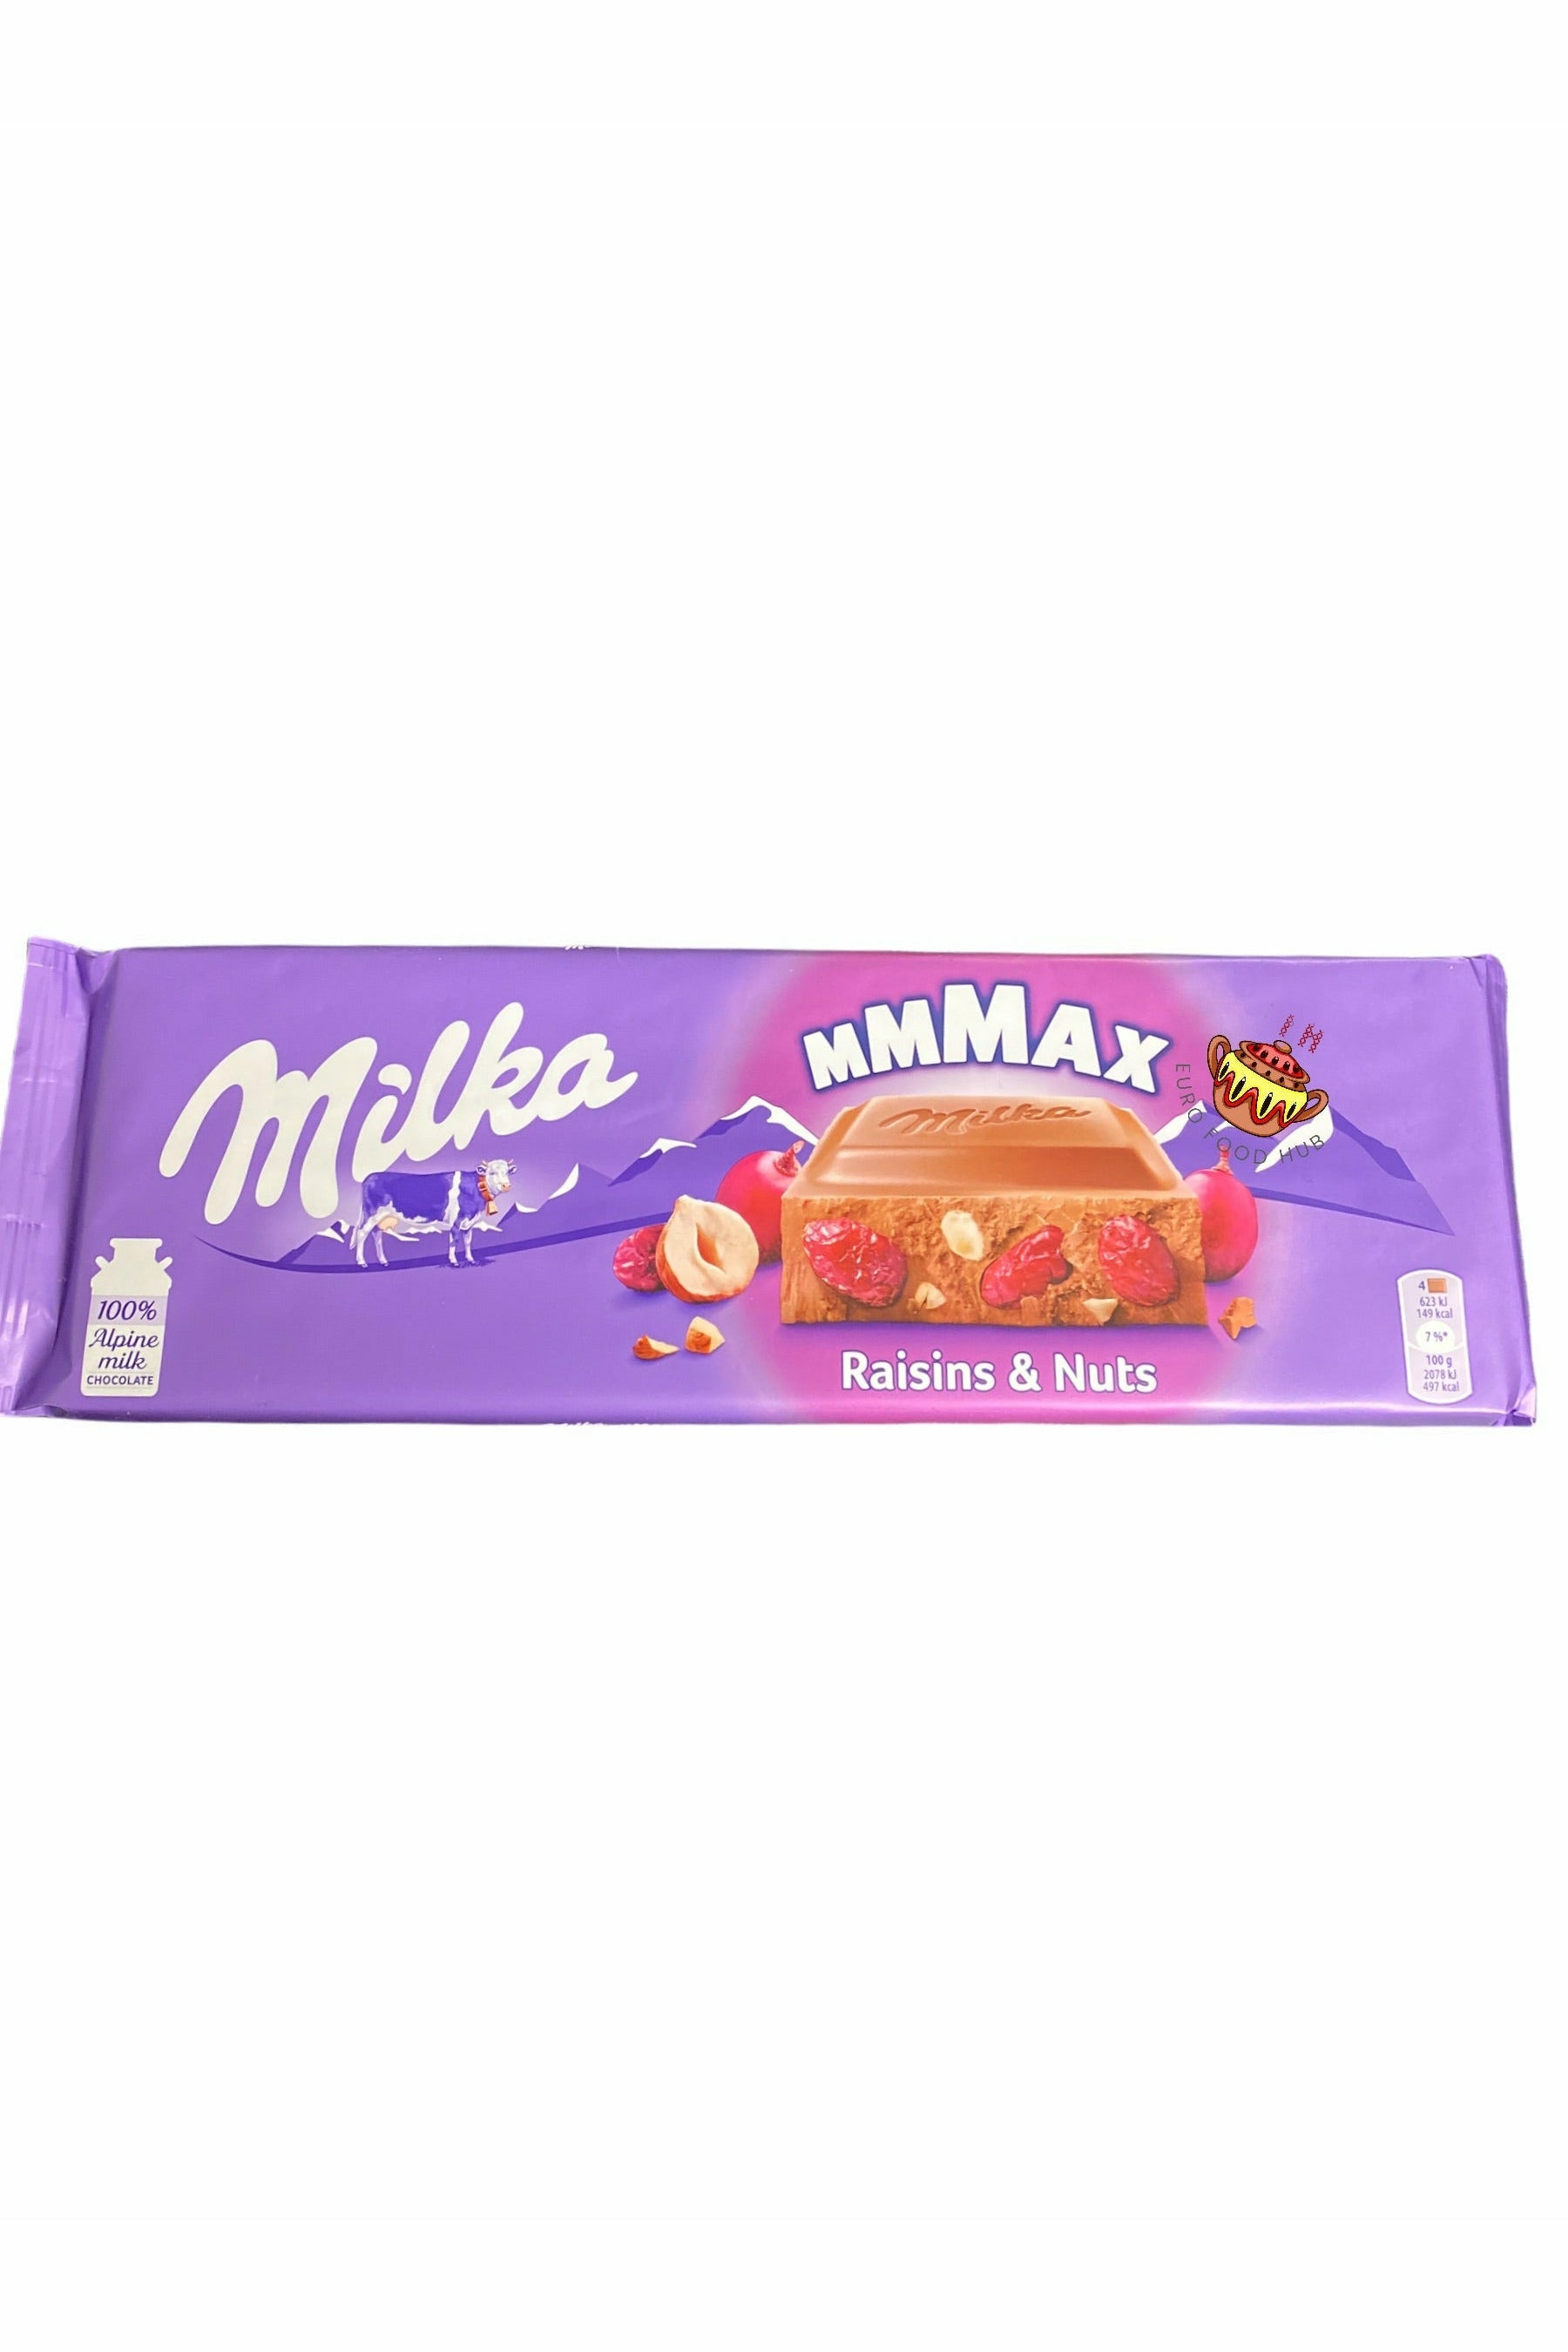 Milka Chocolate - Raisins & Nuts Max - 300g